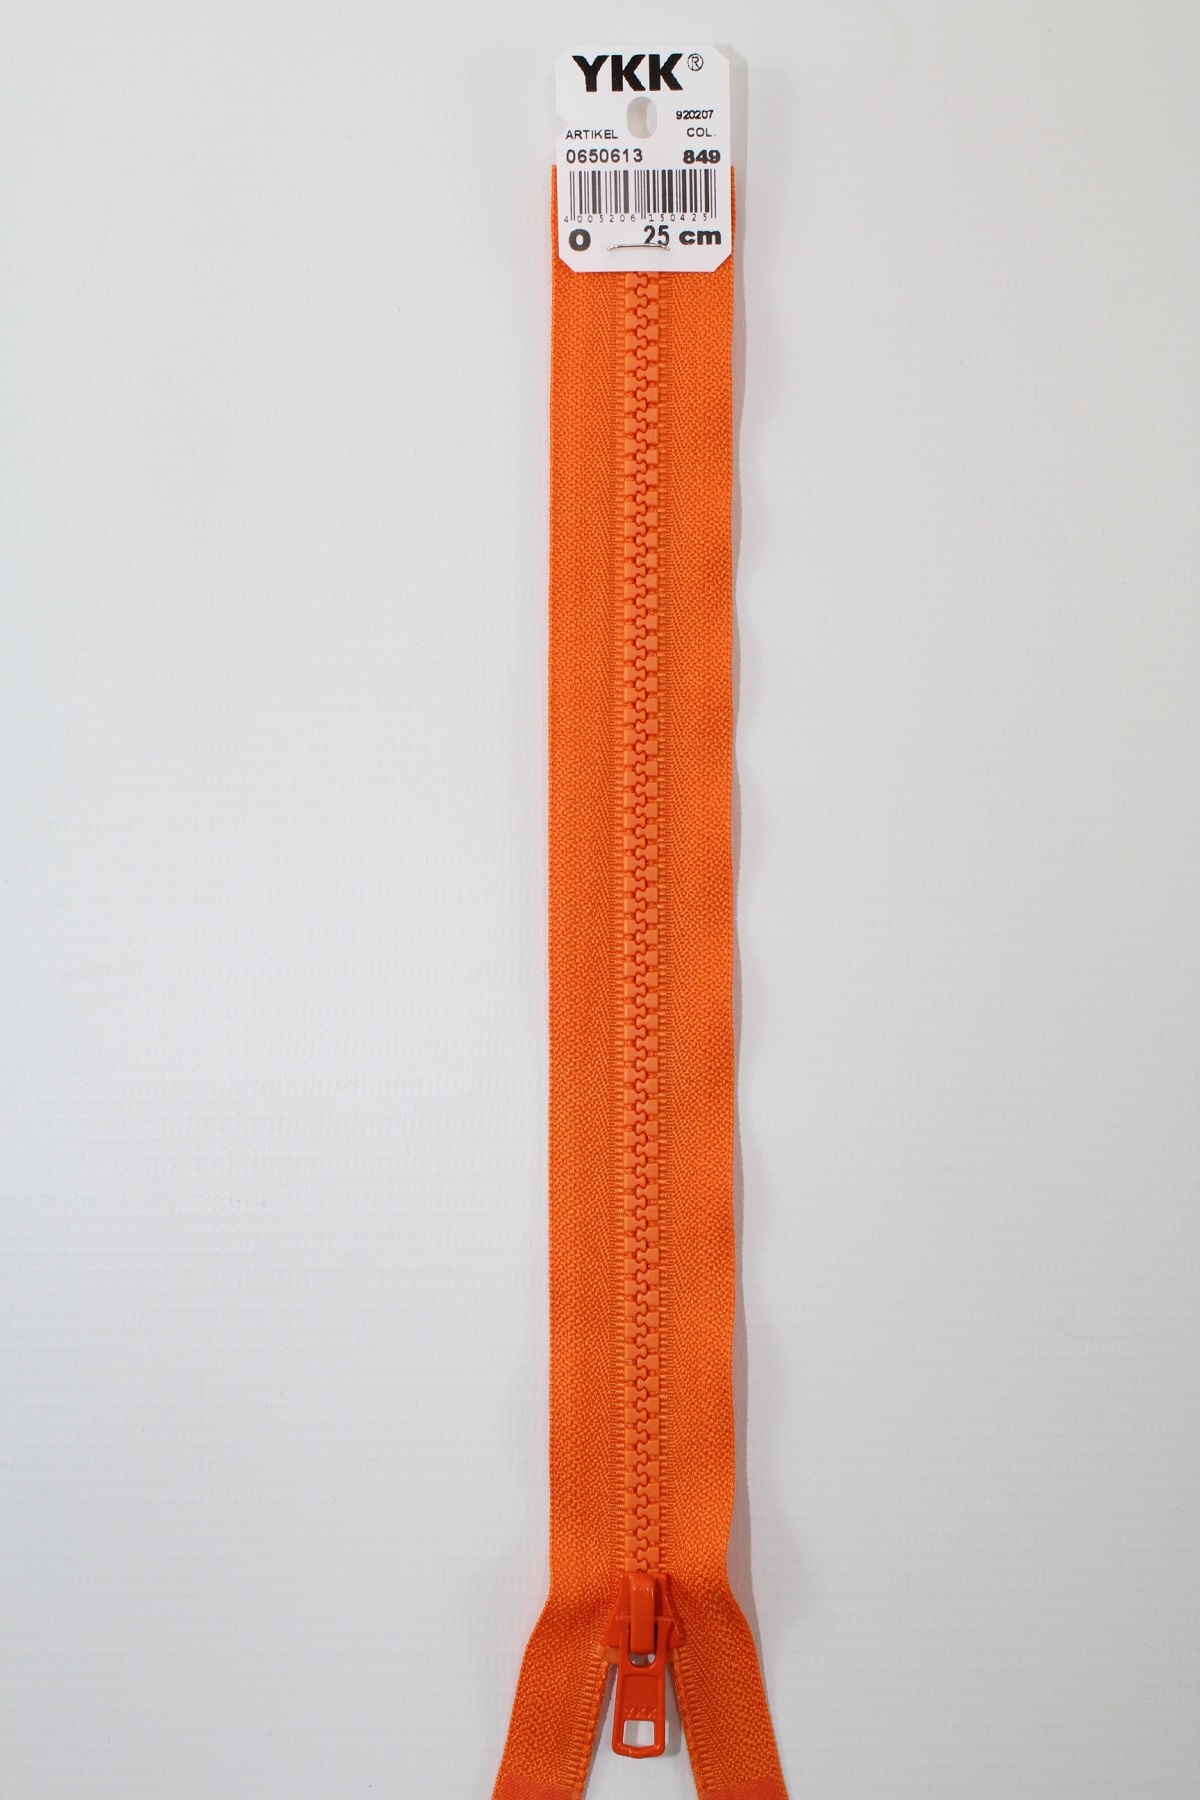 YKK - Reissverschlüsse 25 cm - 80 cm, teilbar, orange